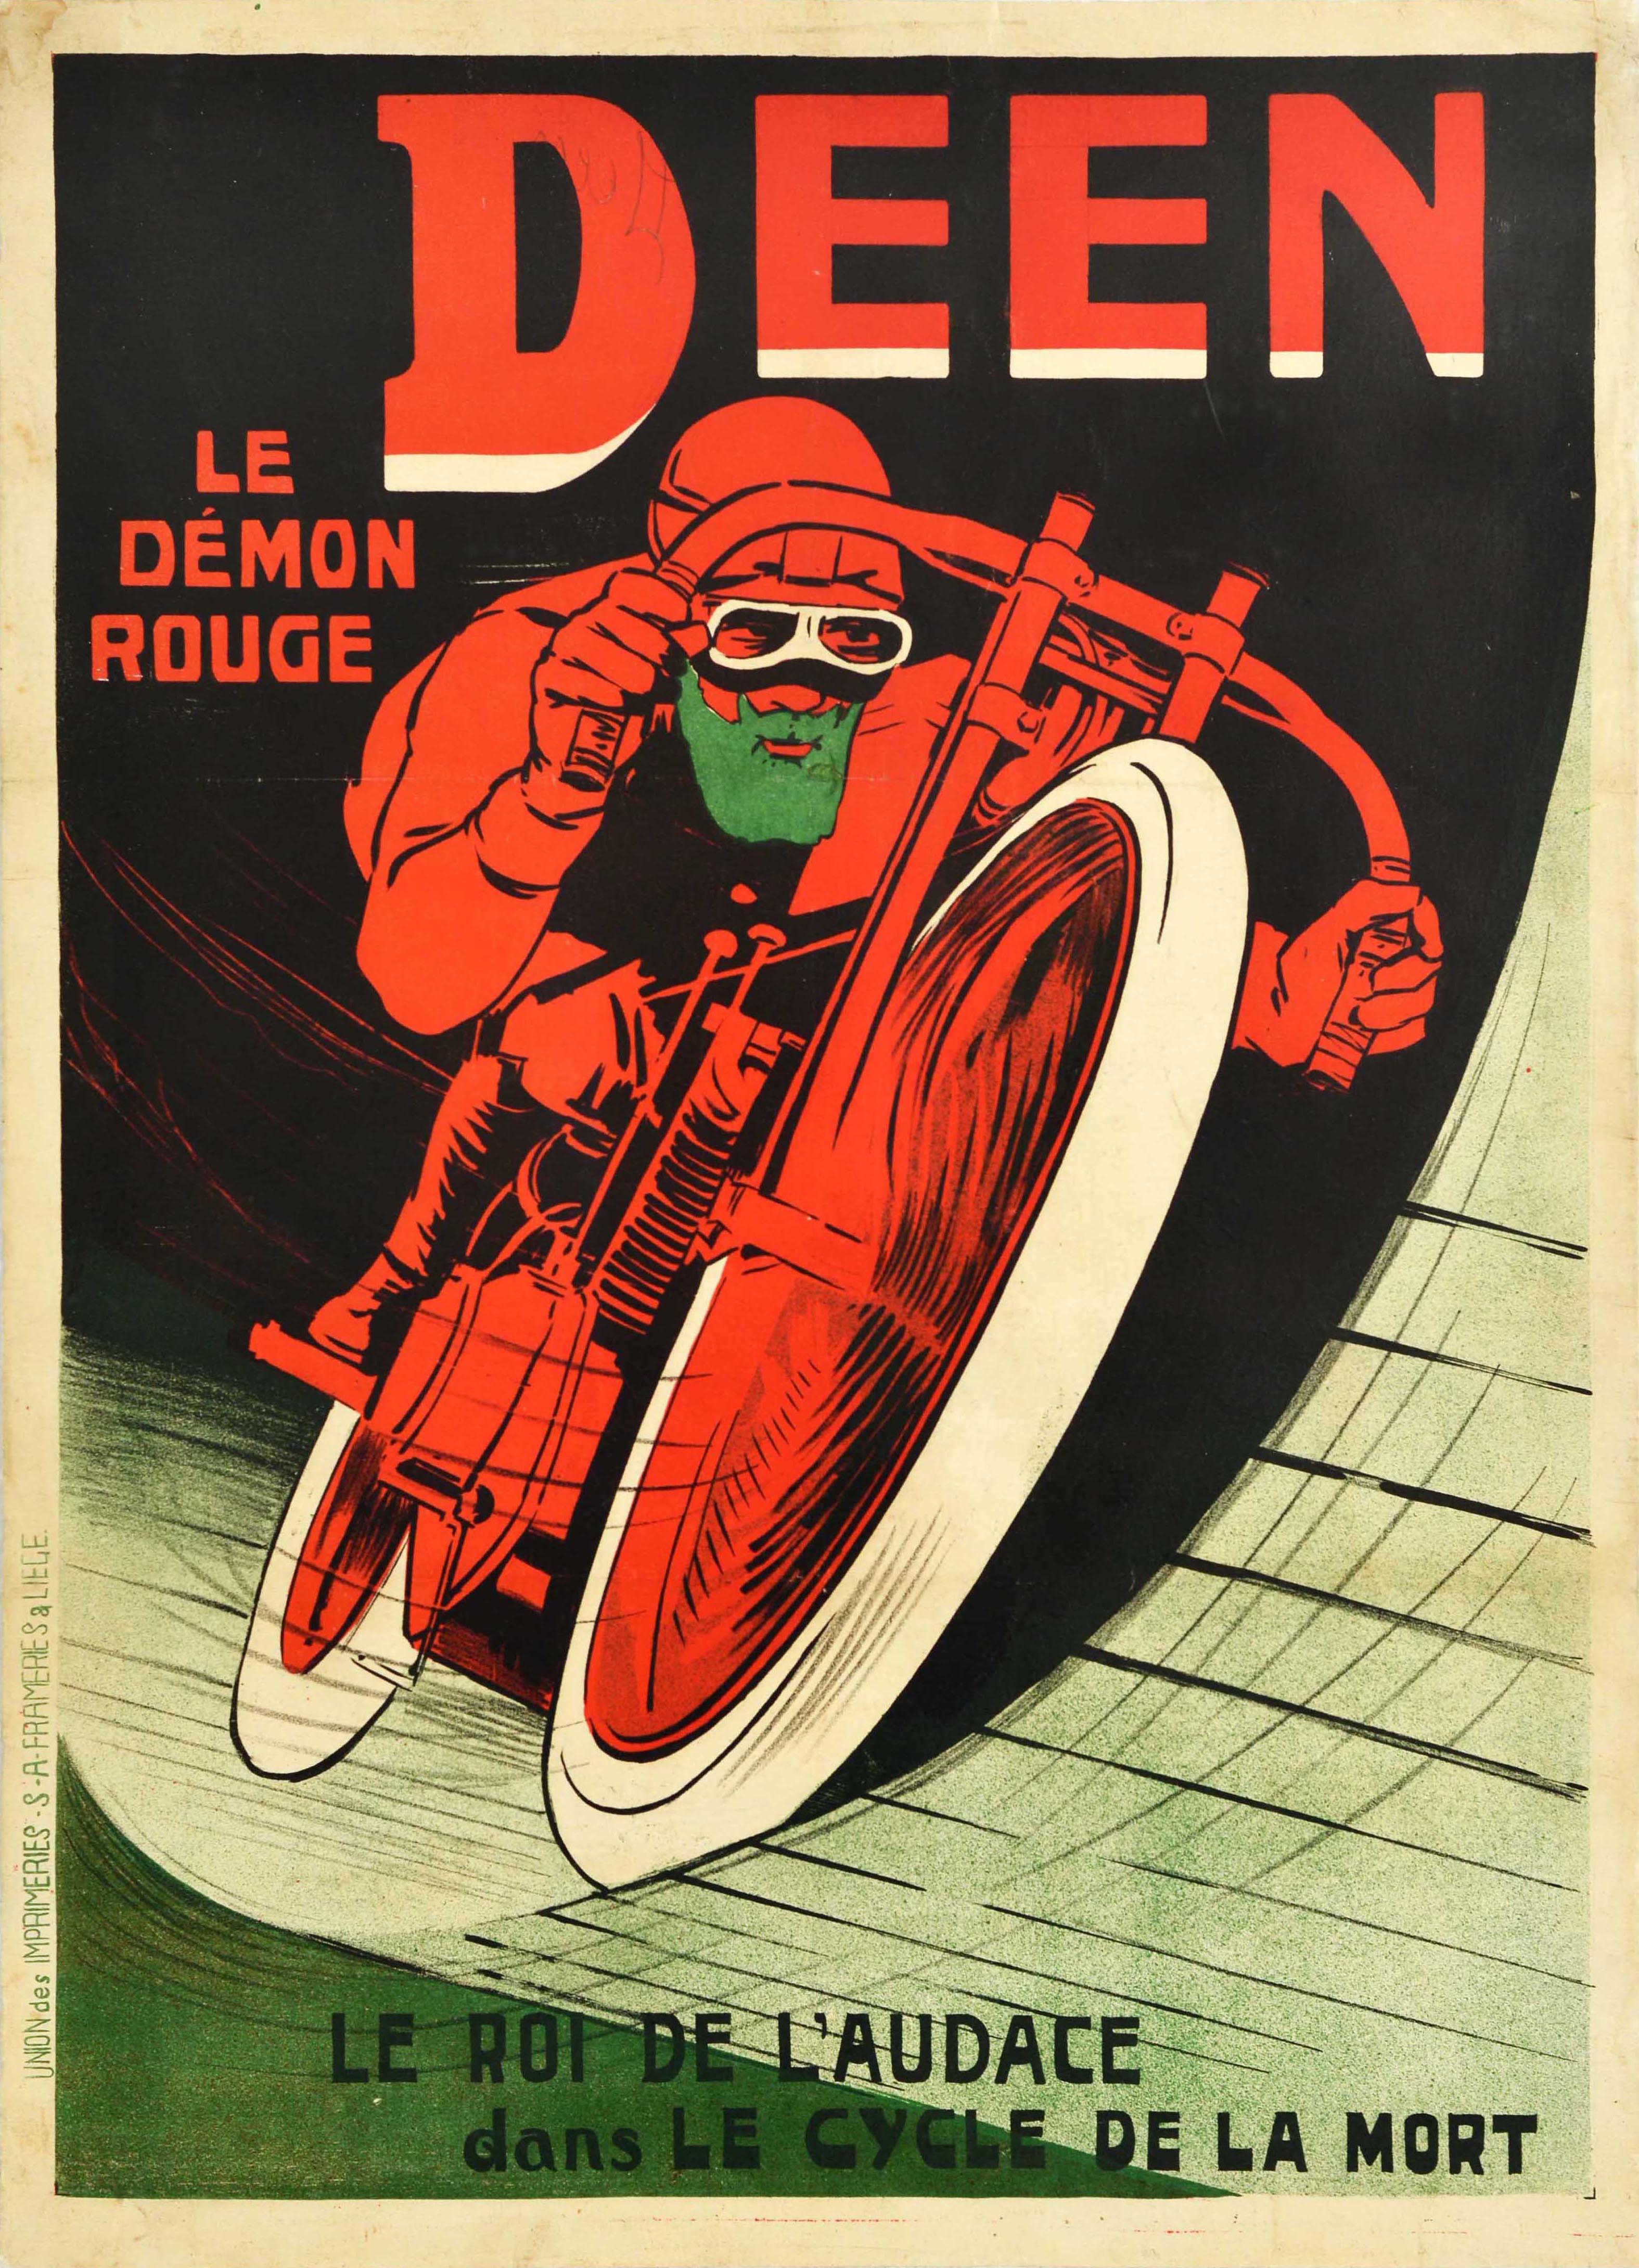 Unknown Print - Original Antique Motorsport Circus Poster Deen Le Demon Rouge Red Devil Design